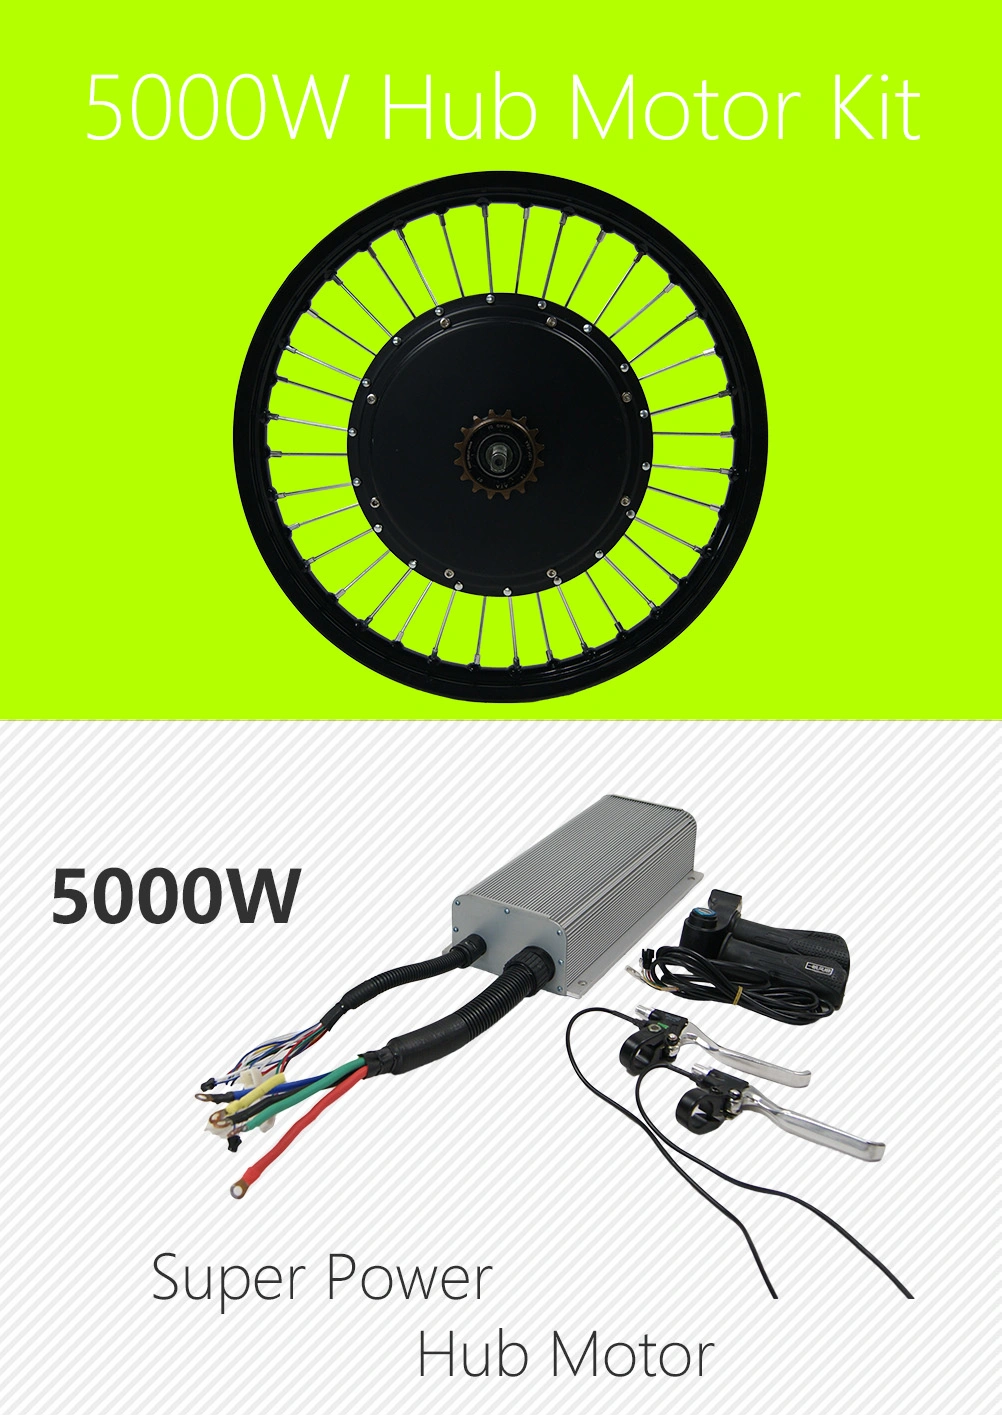 New Powerful Electric Bike Kit 5000W Hub Motor for Motorcycle